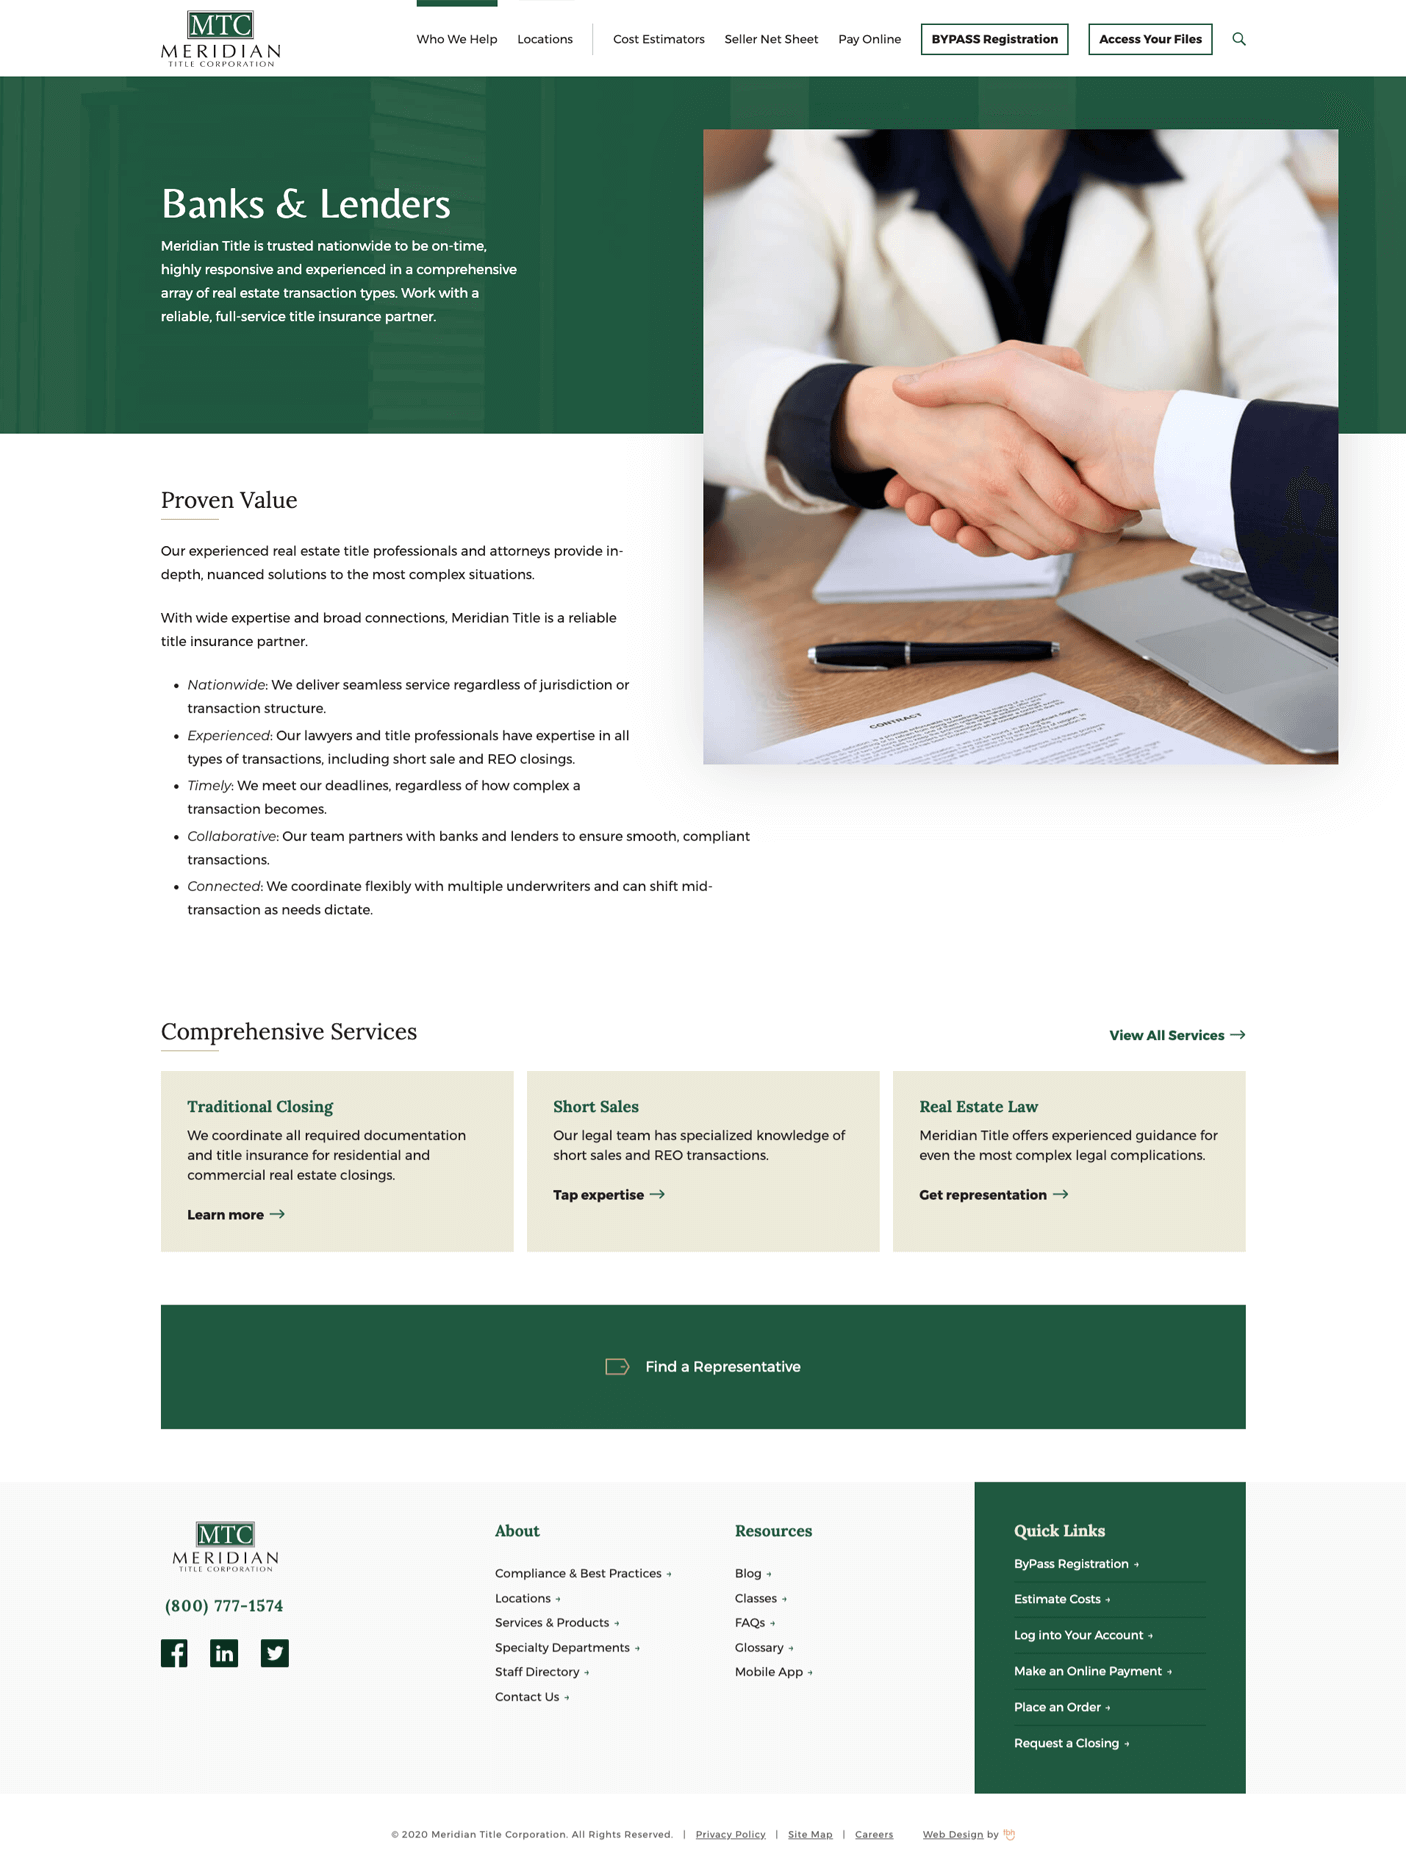 Services interior web page